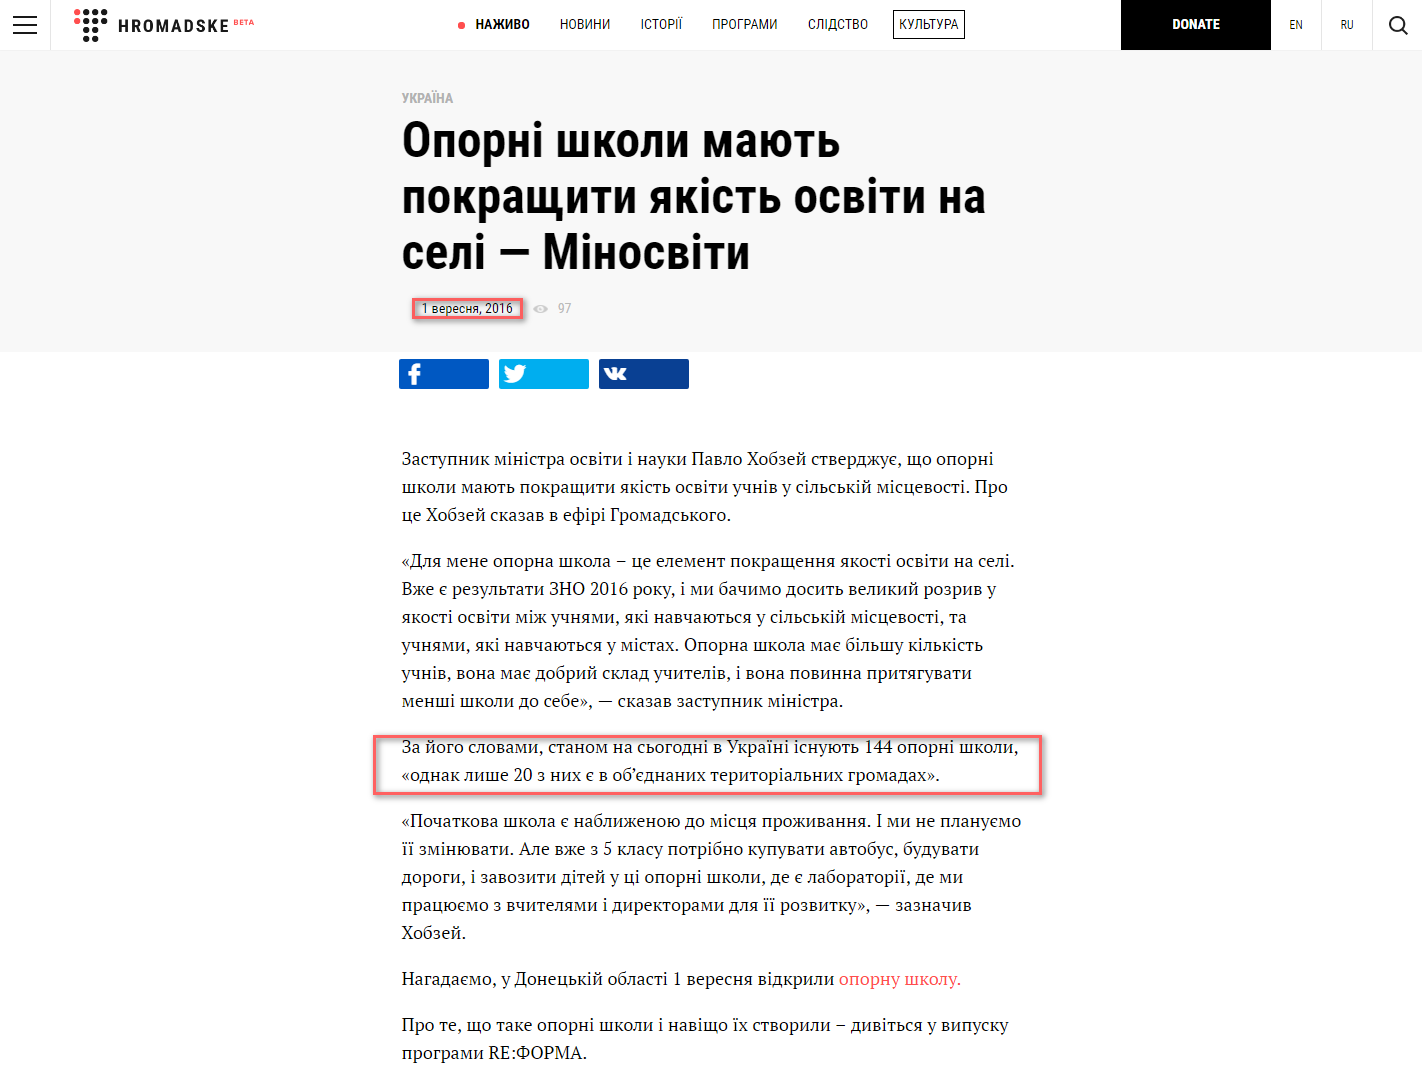 http://hromadske.ua/posts/oporni-shkoly-maiut-pokrashchyty-iakist-osvity-na-seli-minosvity